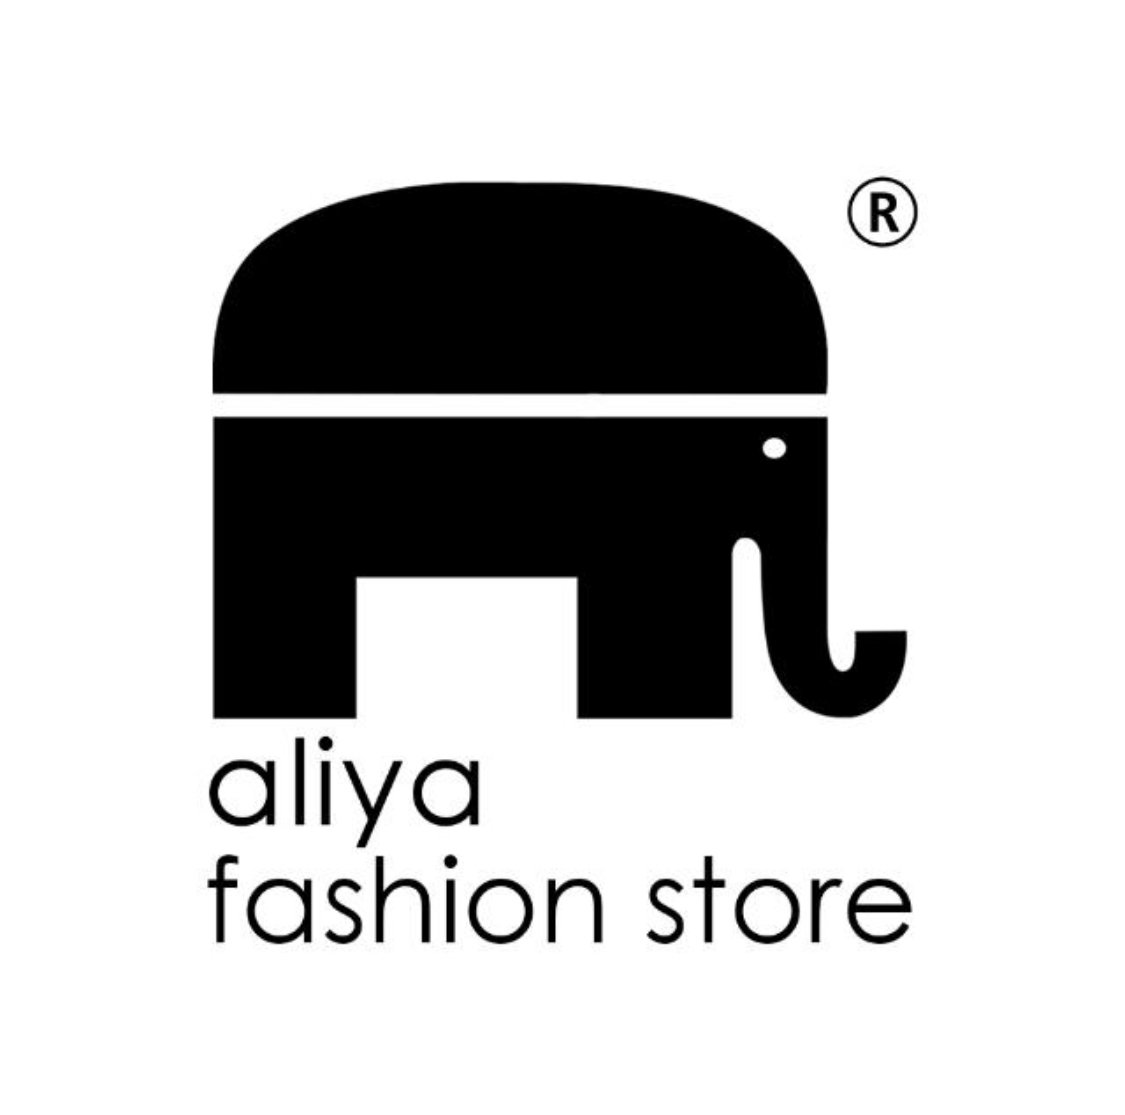 Aliya Fashion Store logo